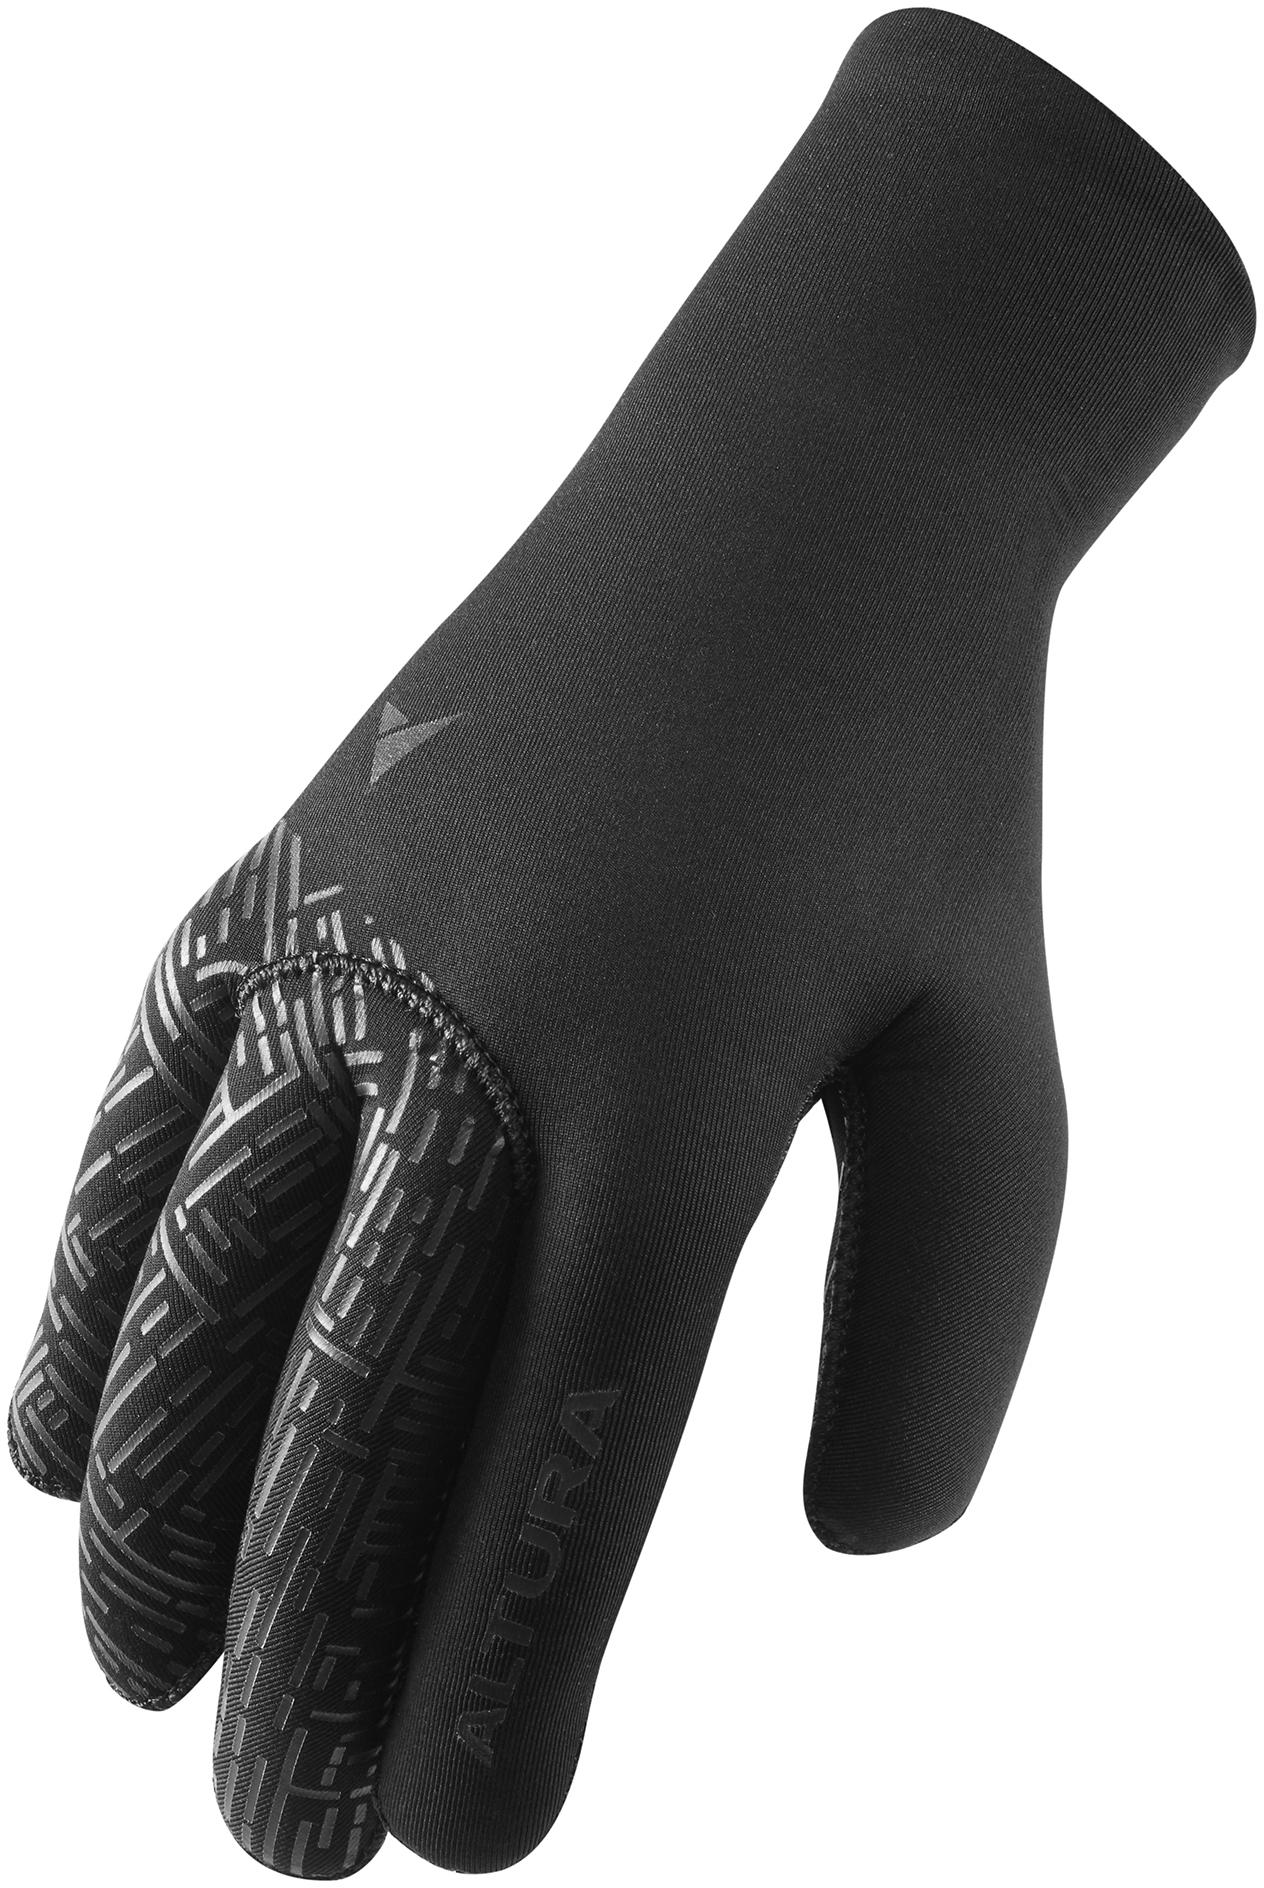 Altura Thermostretch Windproof Gloves Black Xl